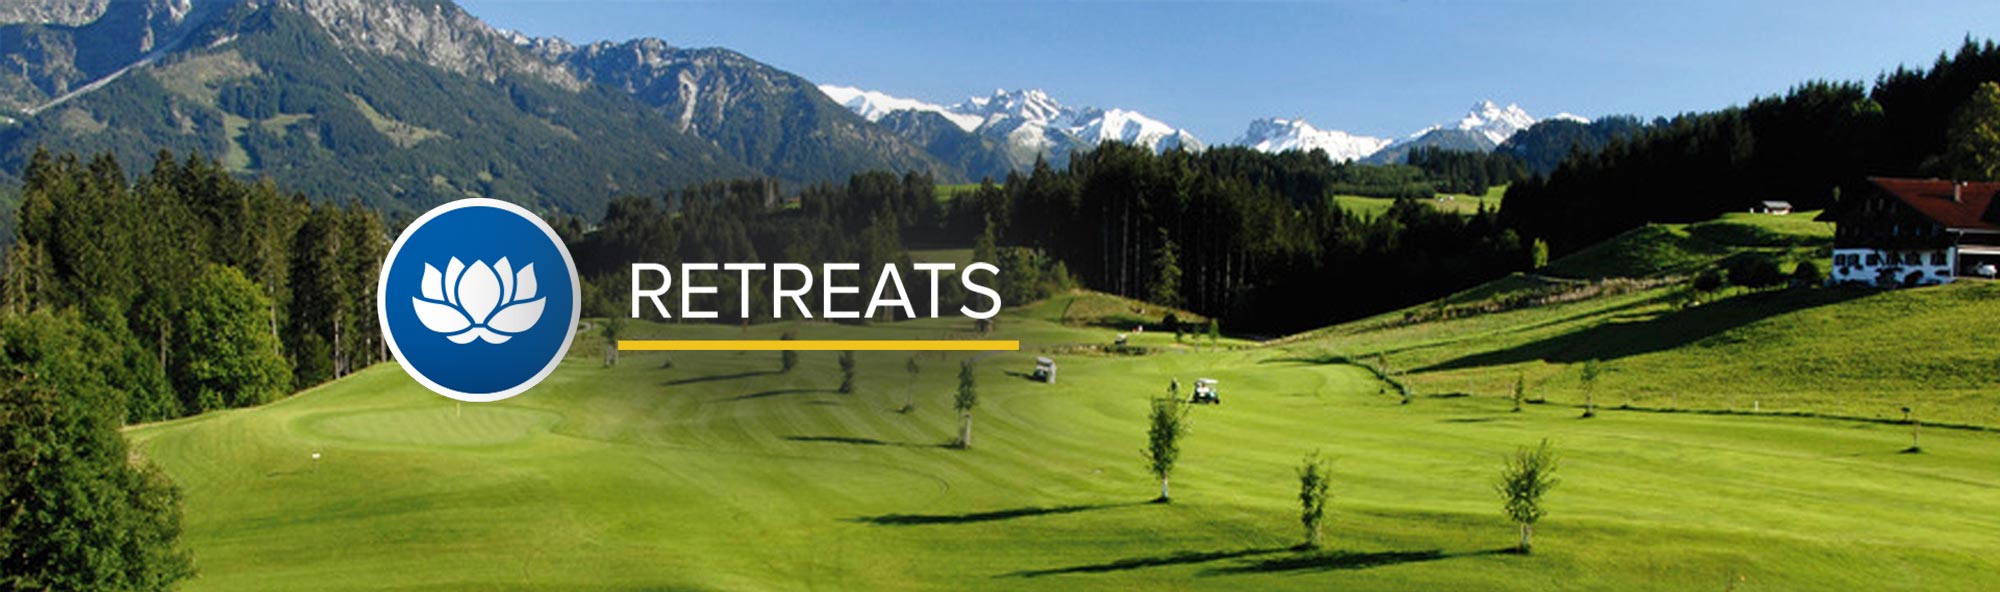 Golf and Yoga Retreats